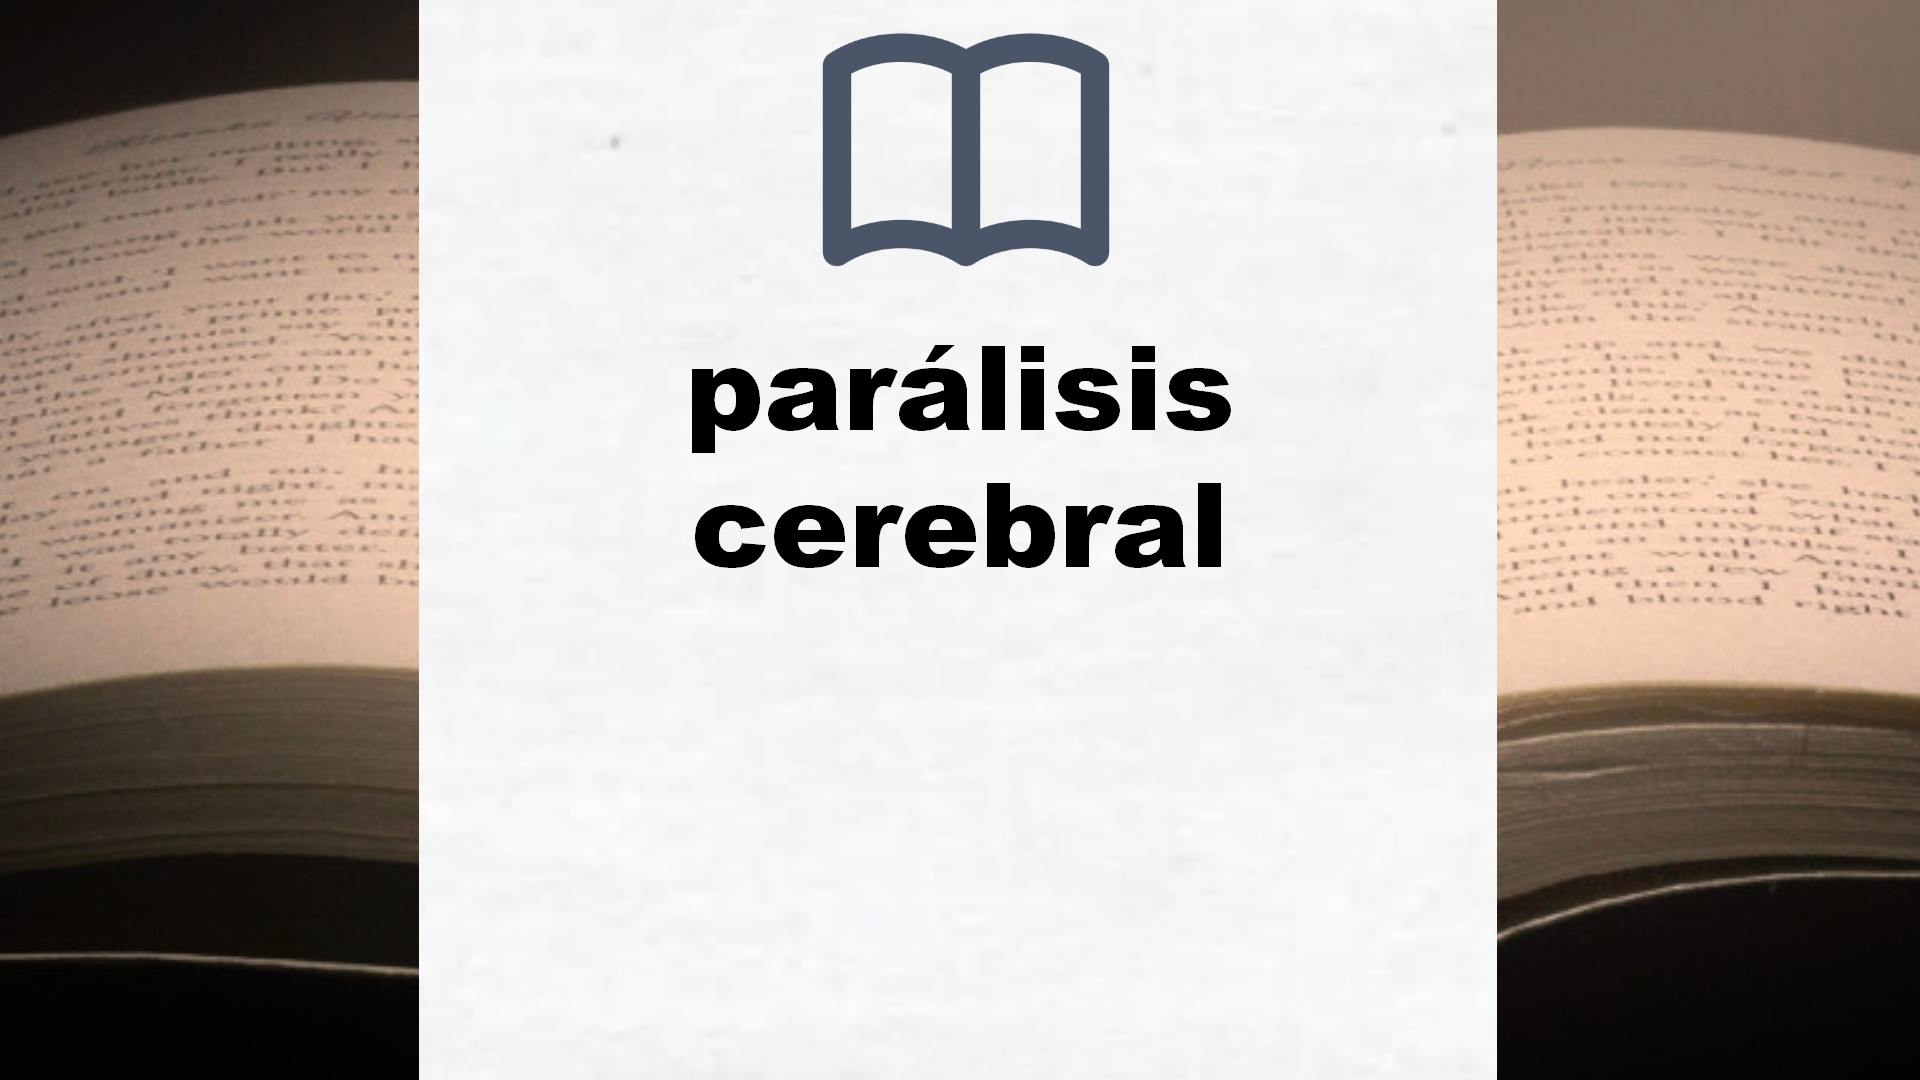 Libros sobre parálisis cerebral